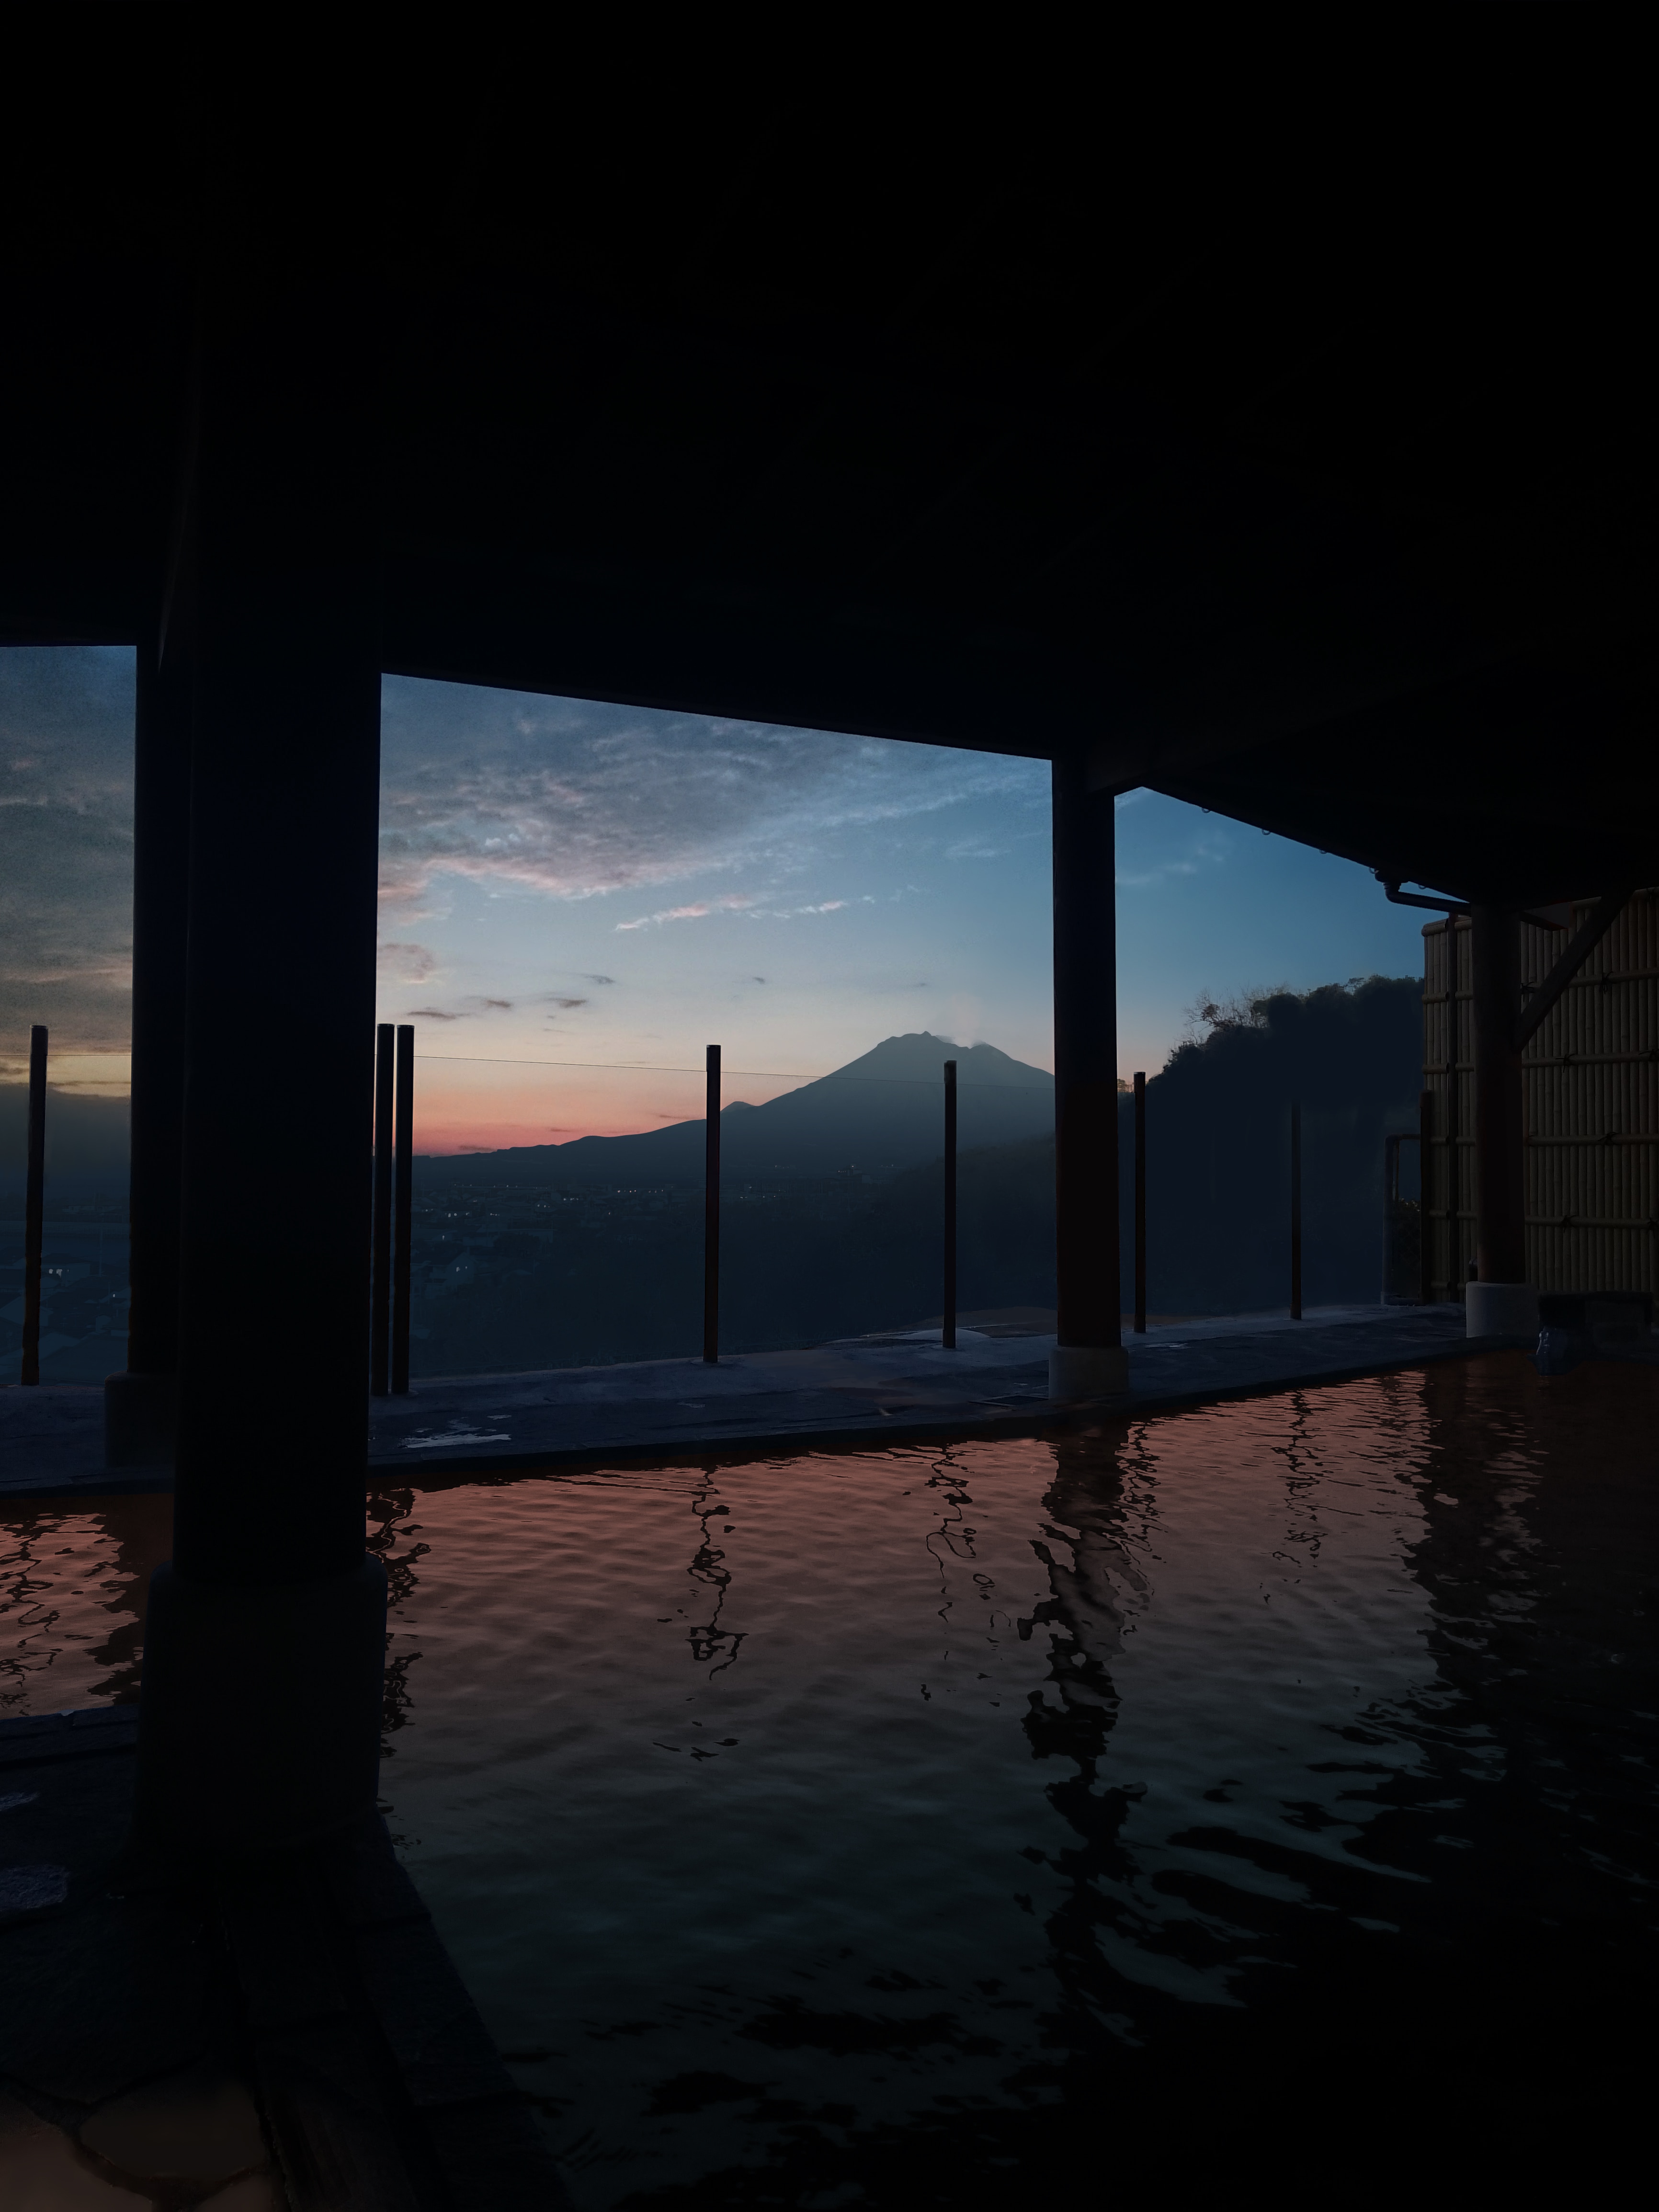 Open-air bath at twilight